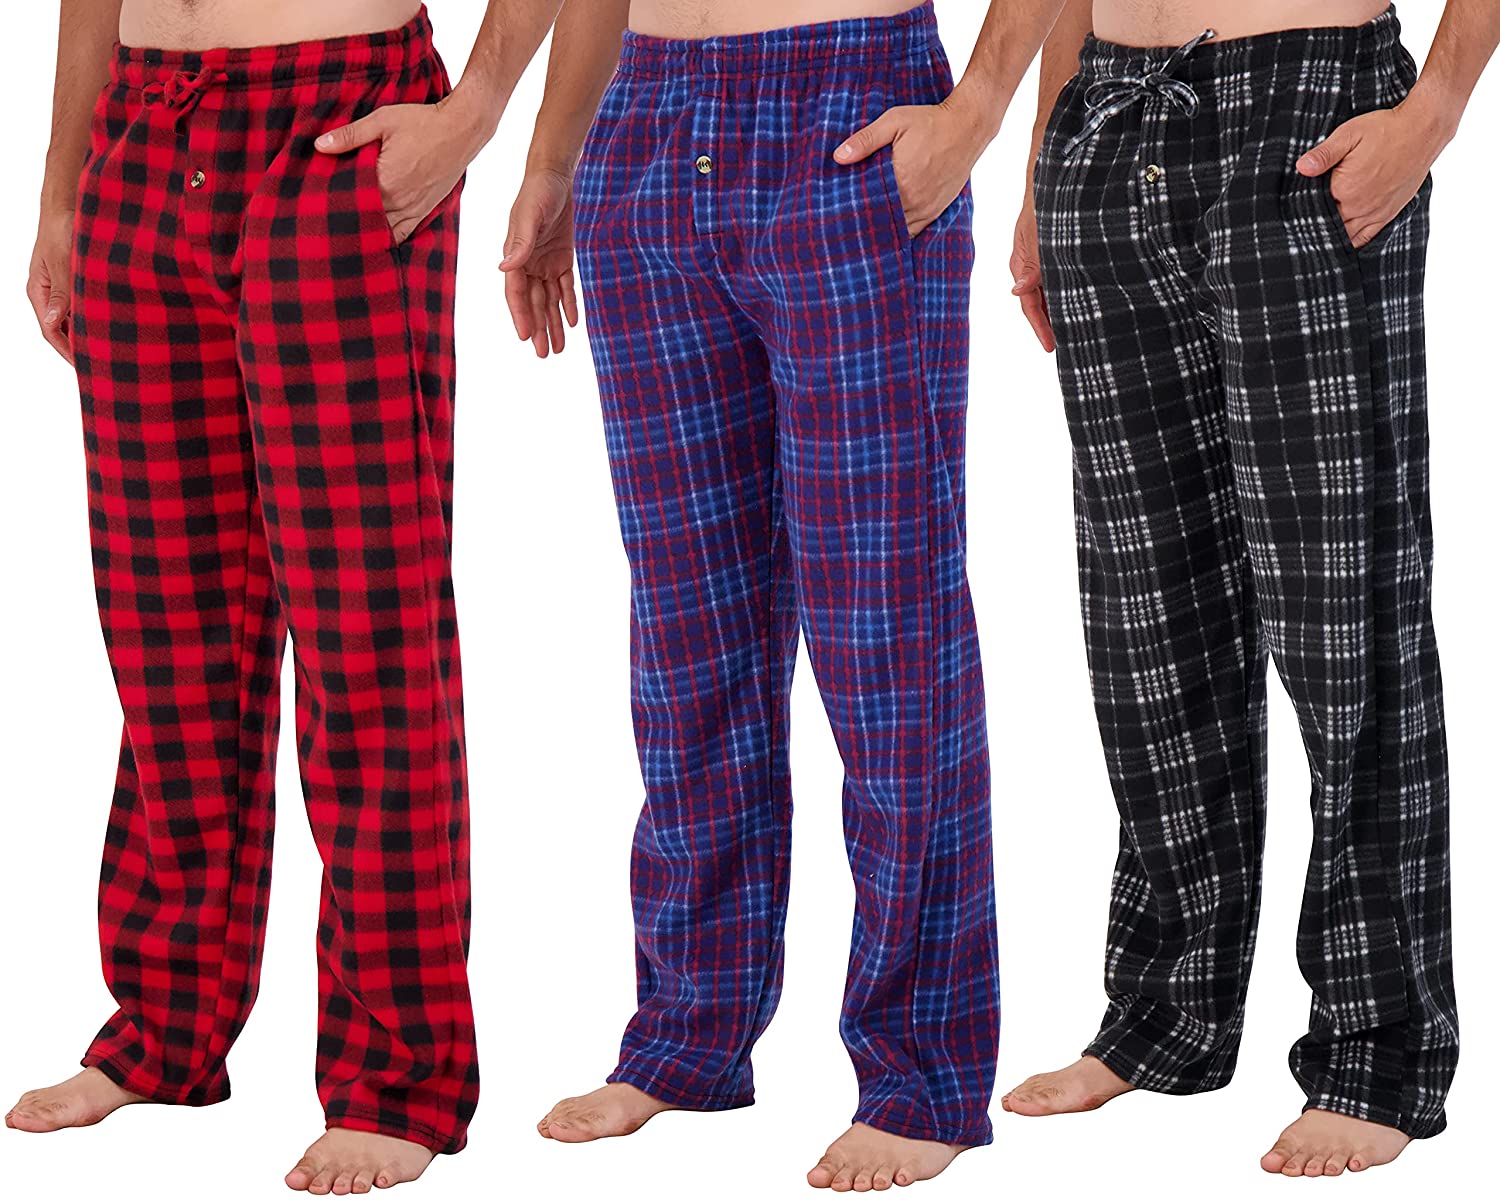 Pajama Pants – How To Care For Silk Pajama Pants - 222TA